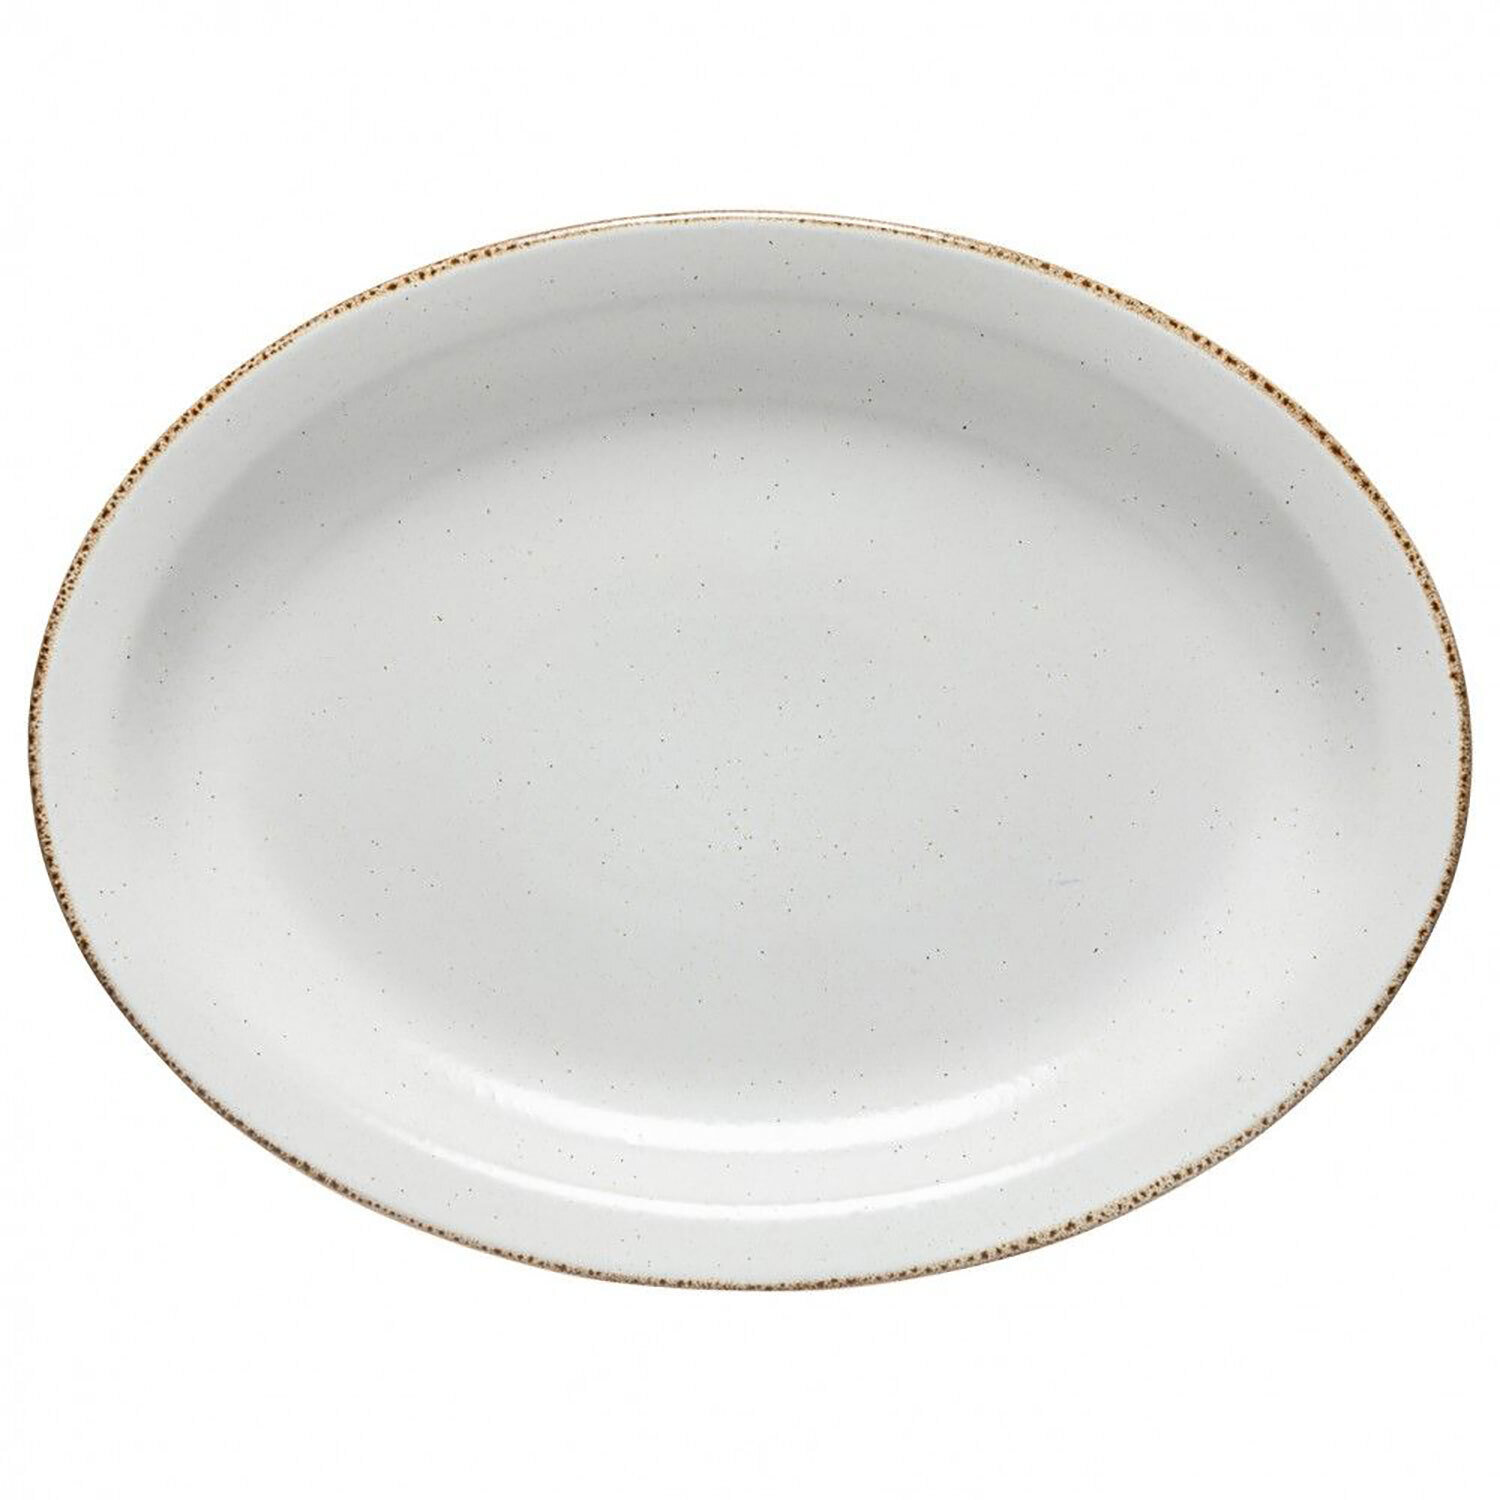 Casafina Positano White Oval Platter 16 Inchch XCA401-WHI